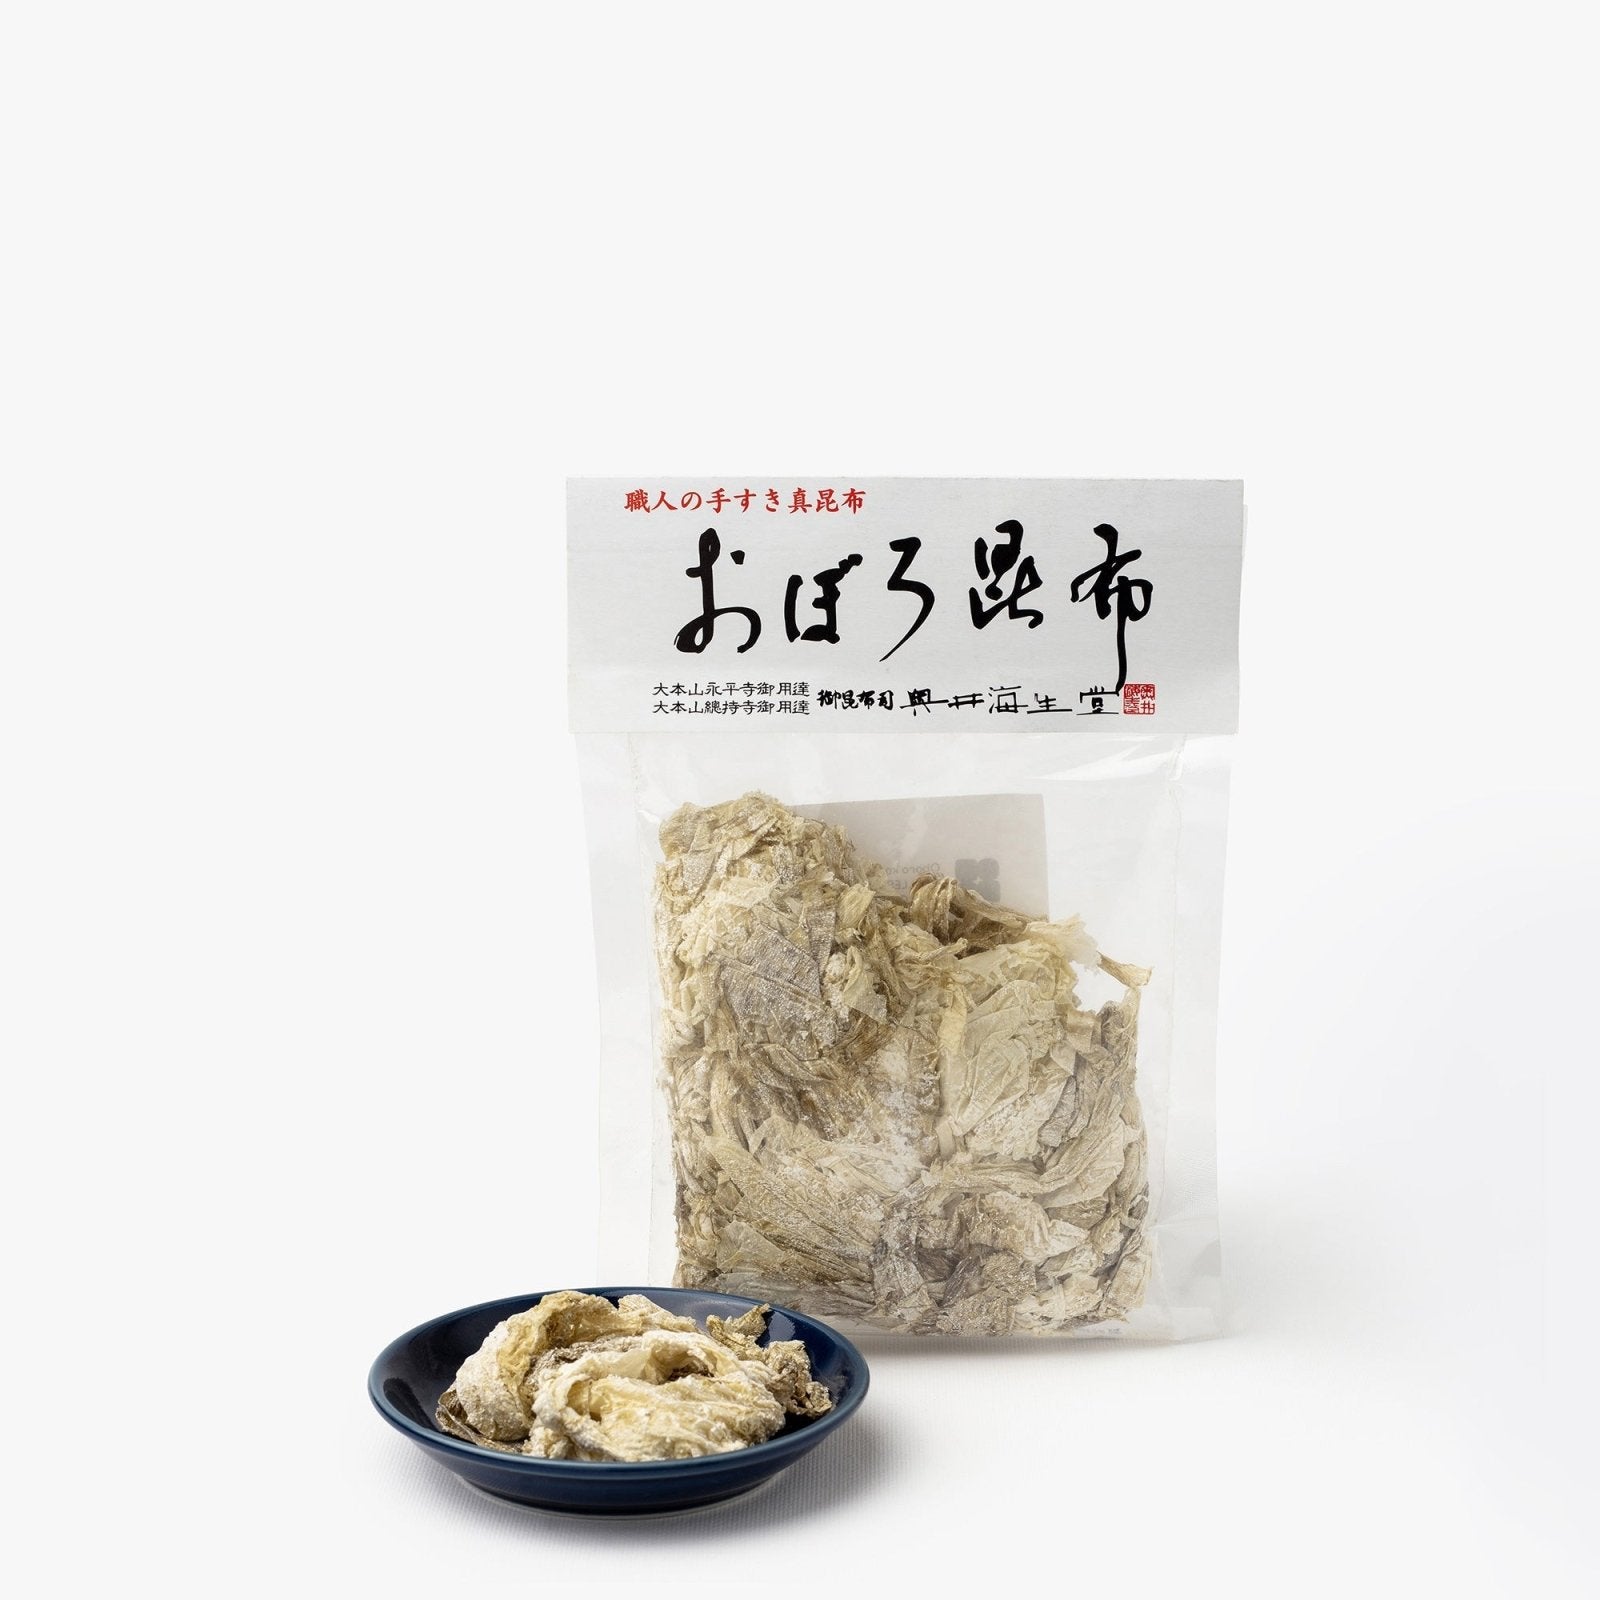 Feuilles d'algue kombu vinaigrées - 20g - Okui Kaiseido - iRASSHAi